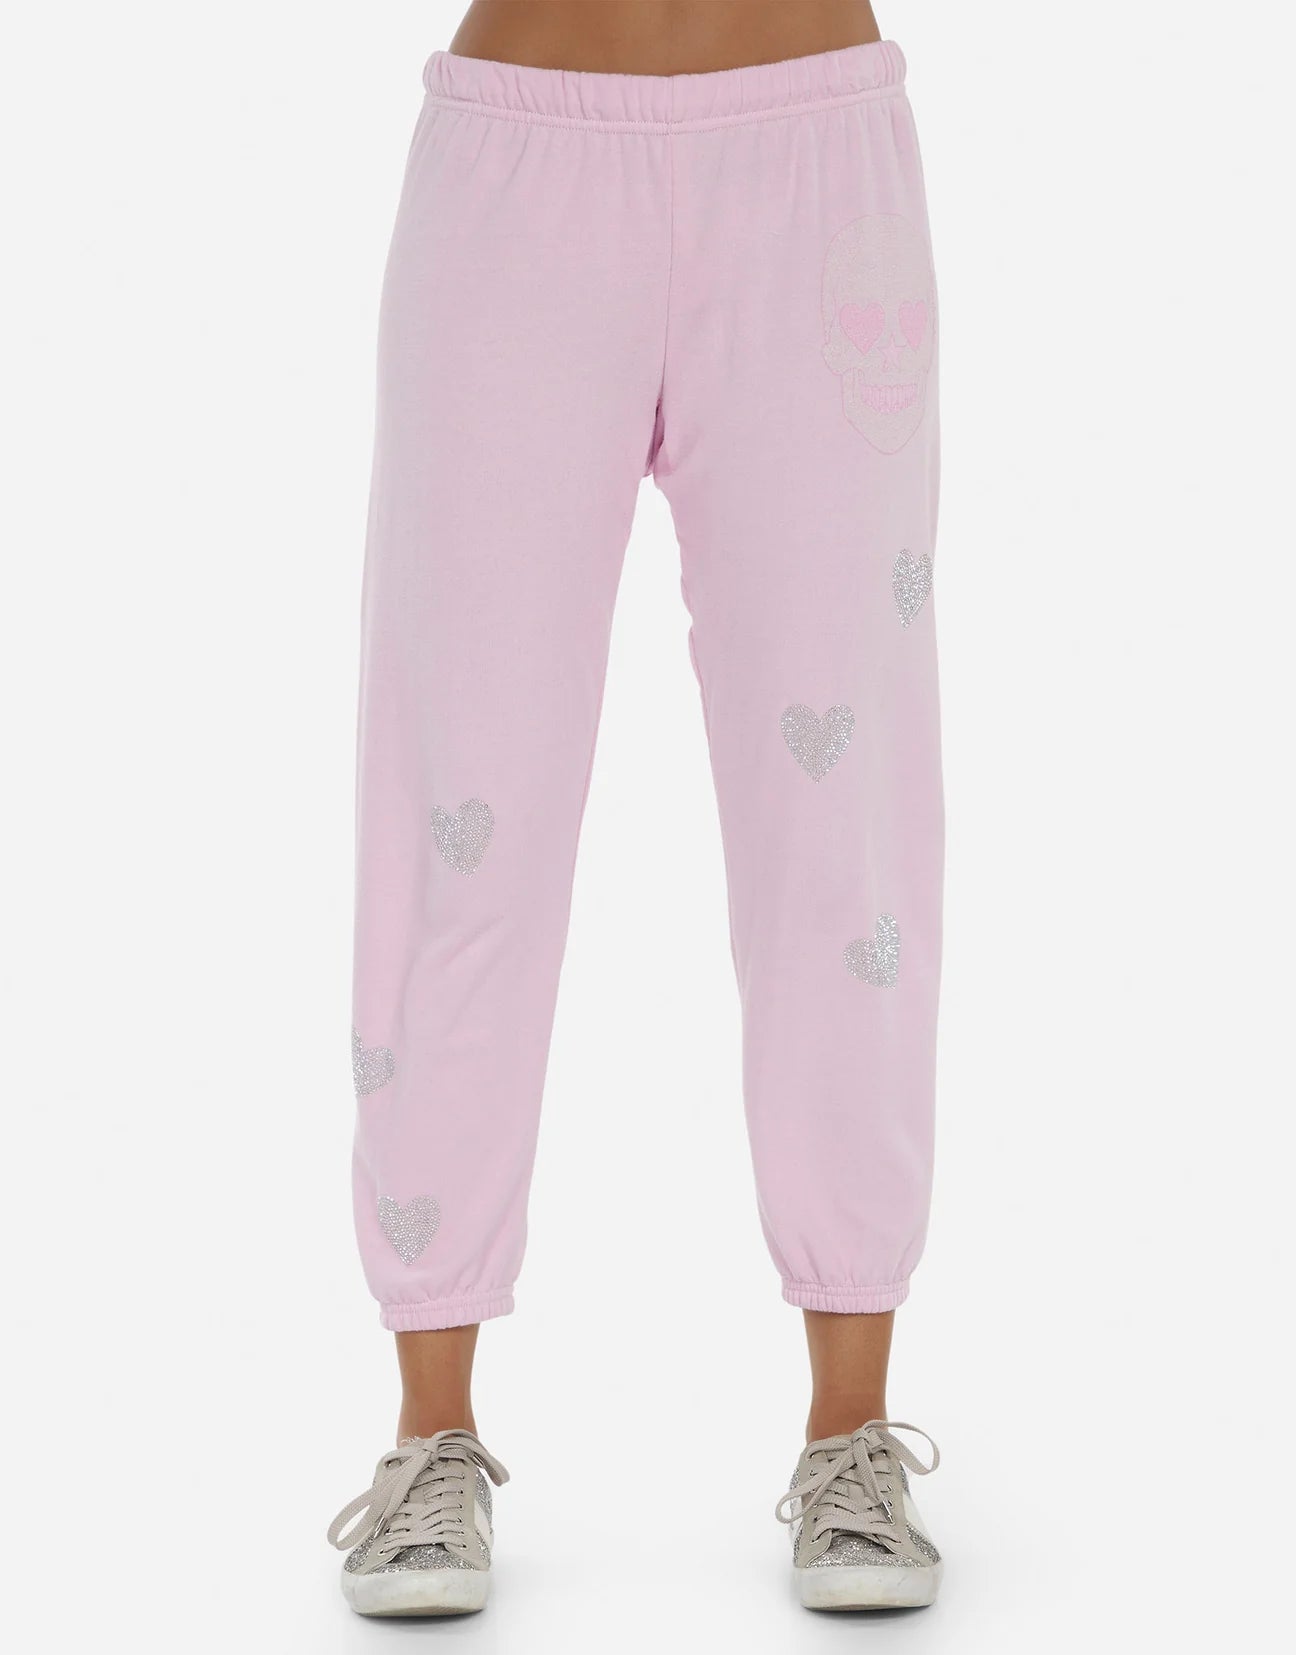 Pink sweatpants size small - Gem